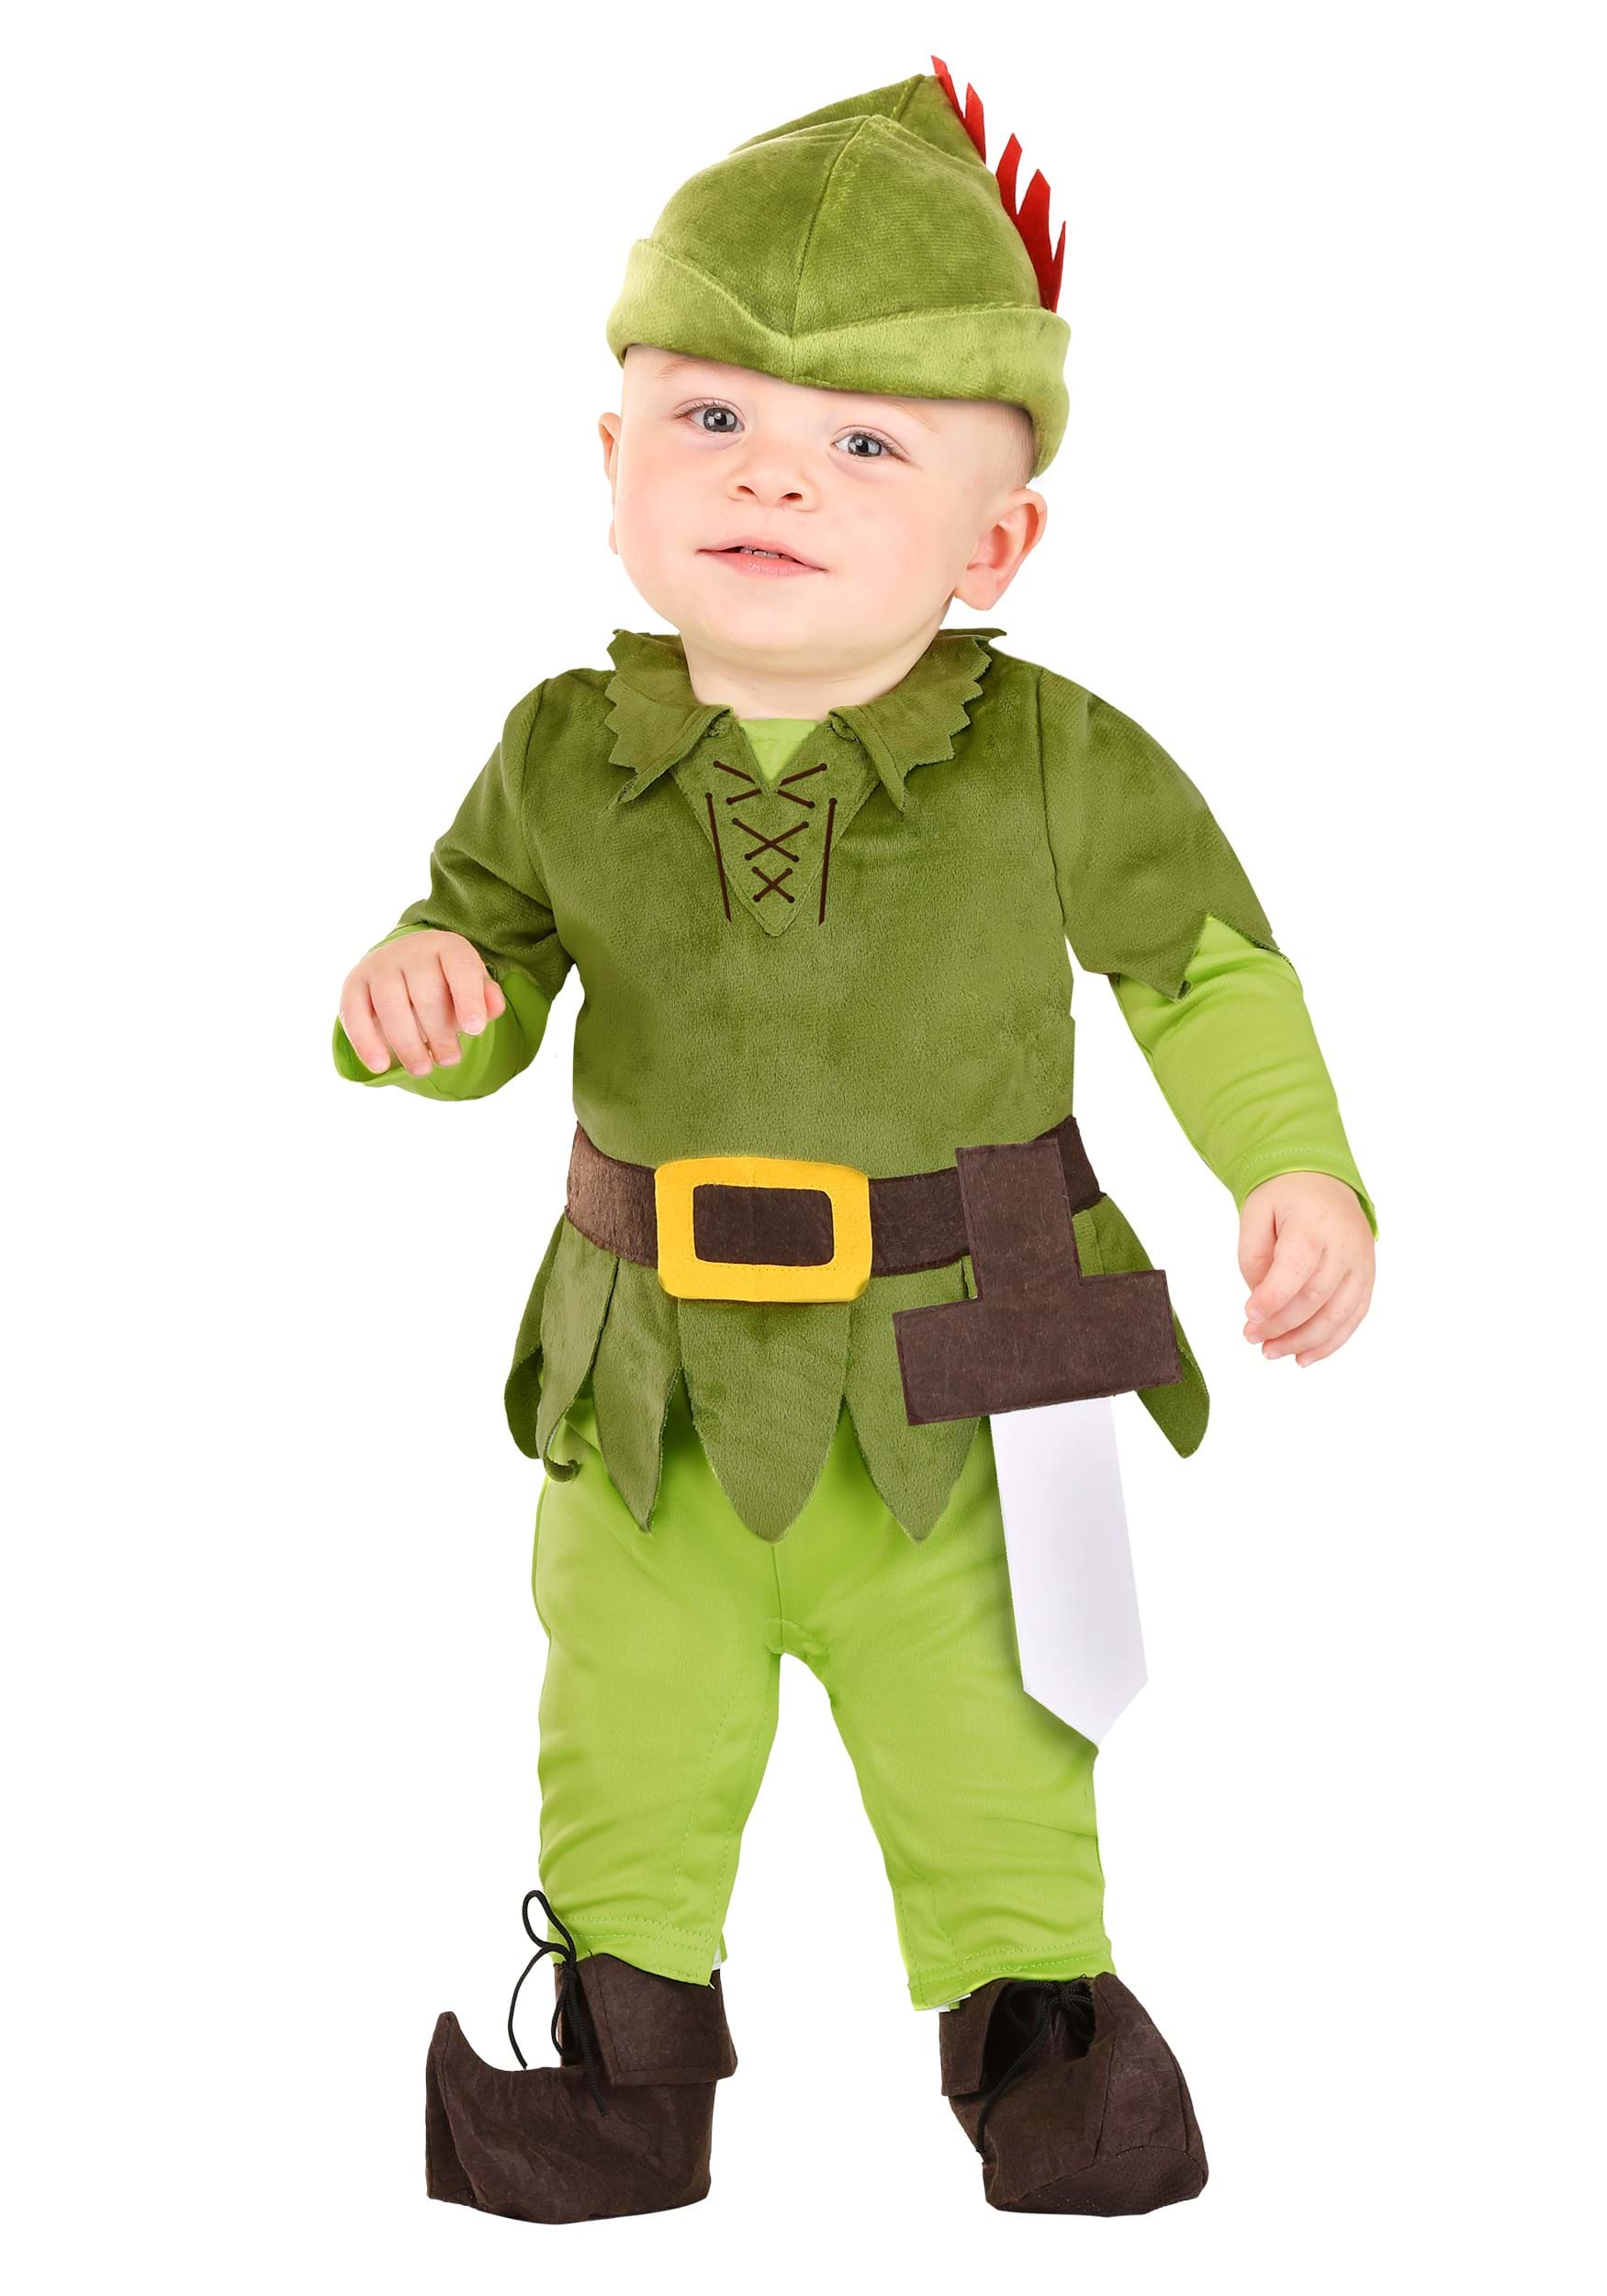 Baby Peter Pan Costume Discount Shop, Save 59% | jlcatj.gob.mx